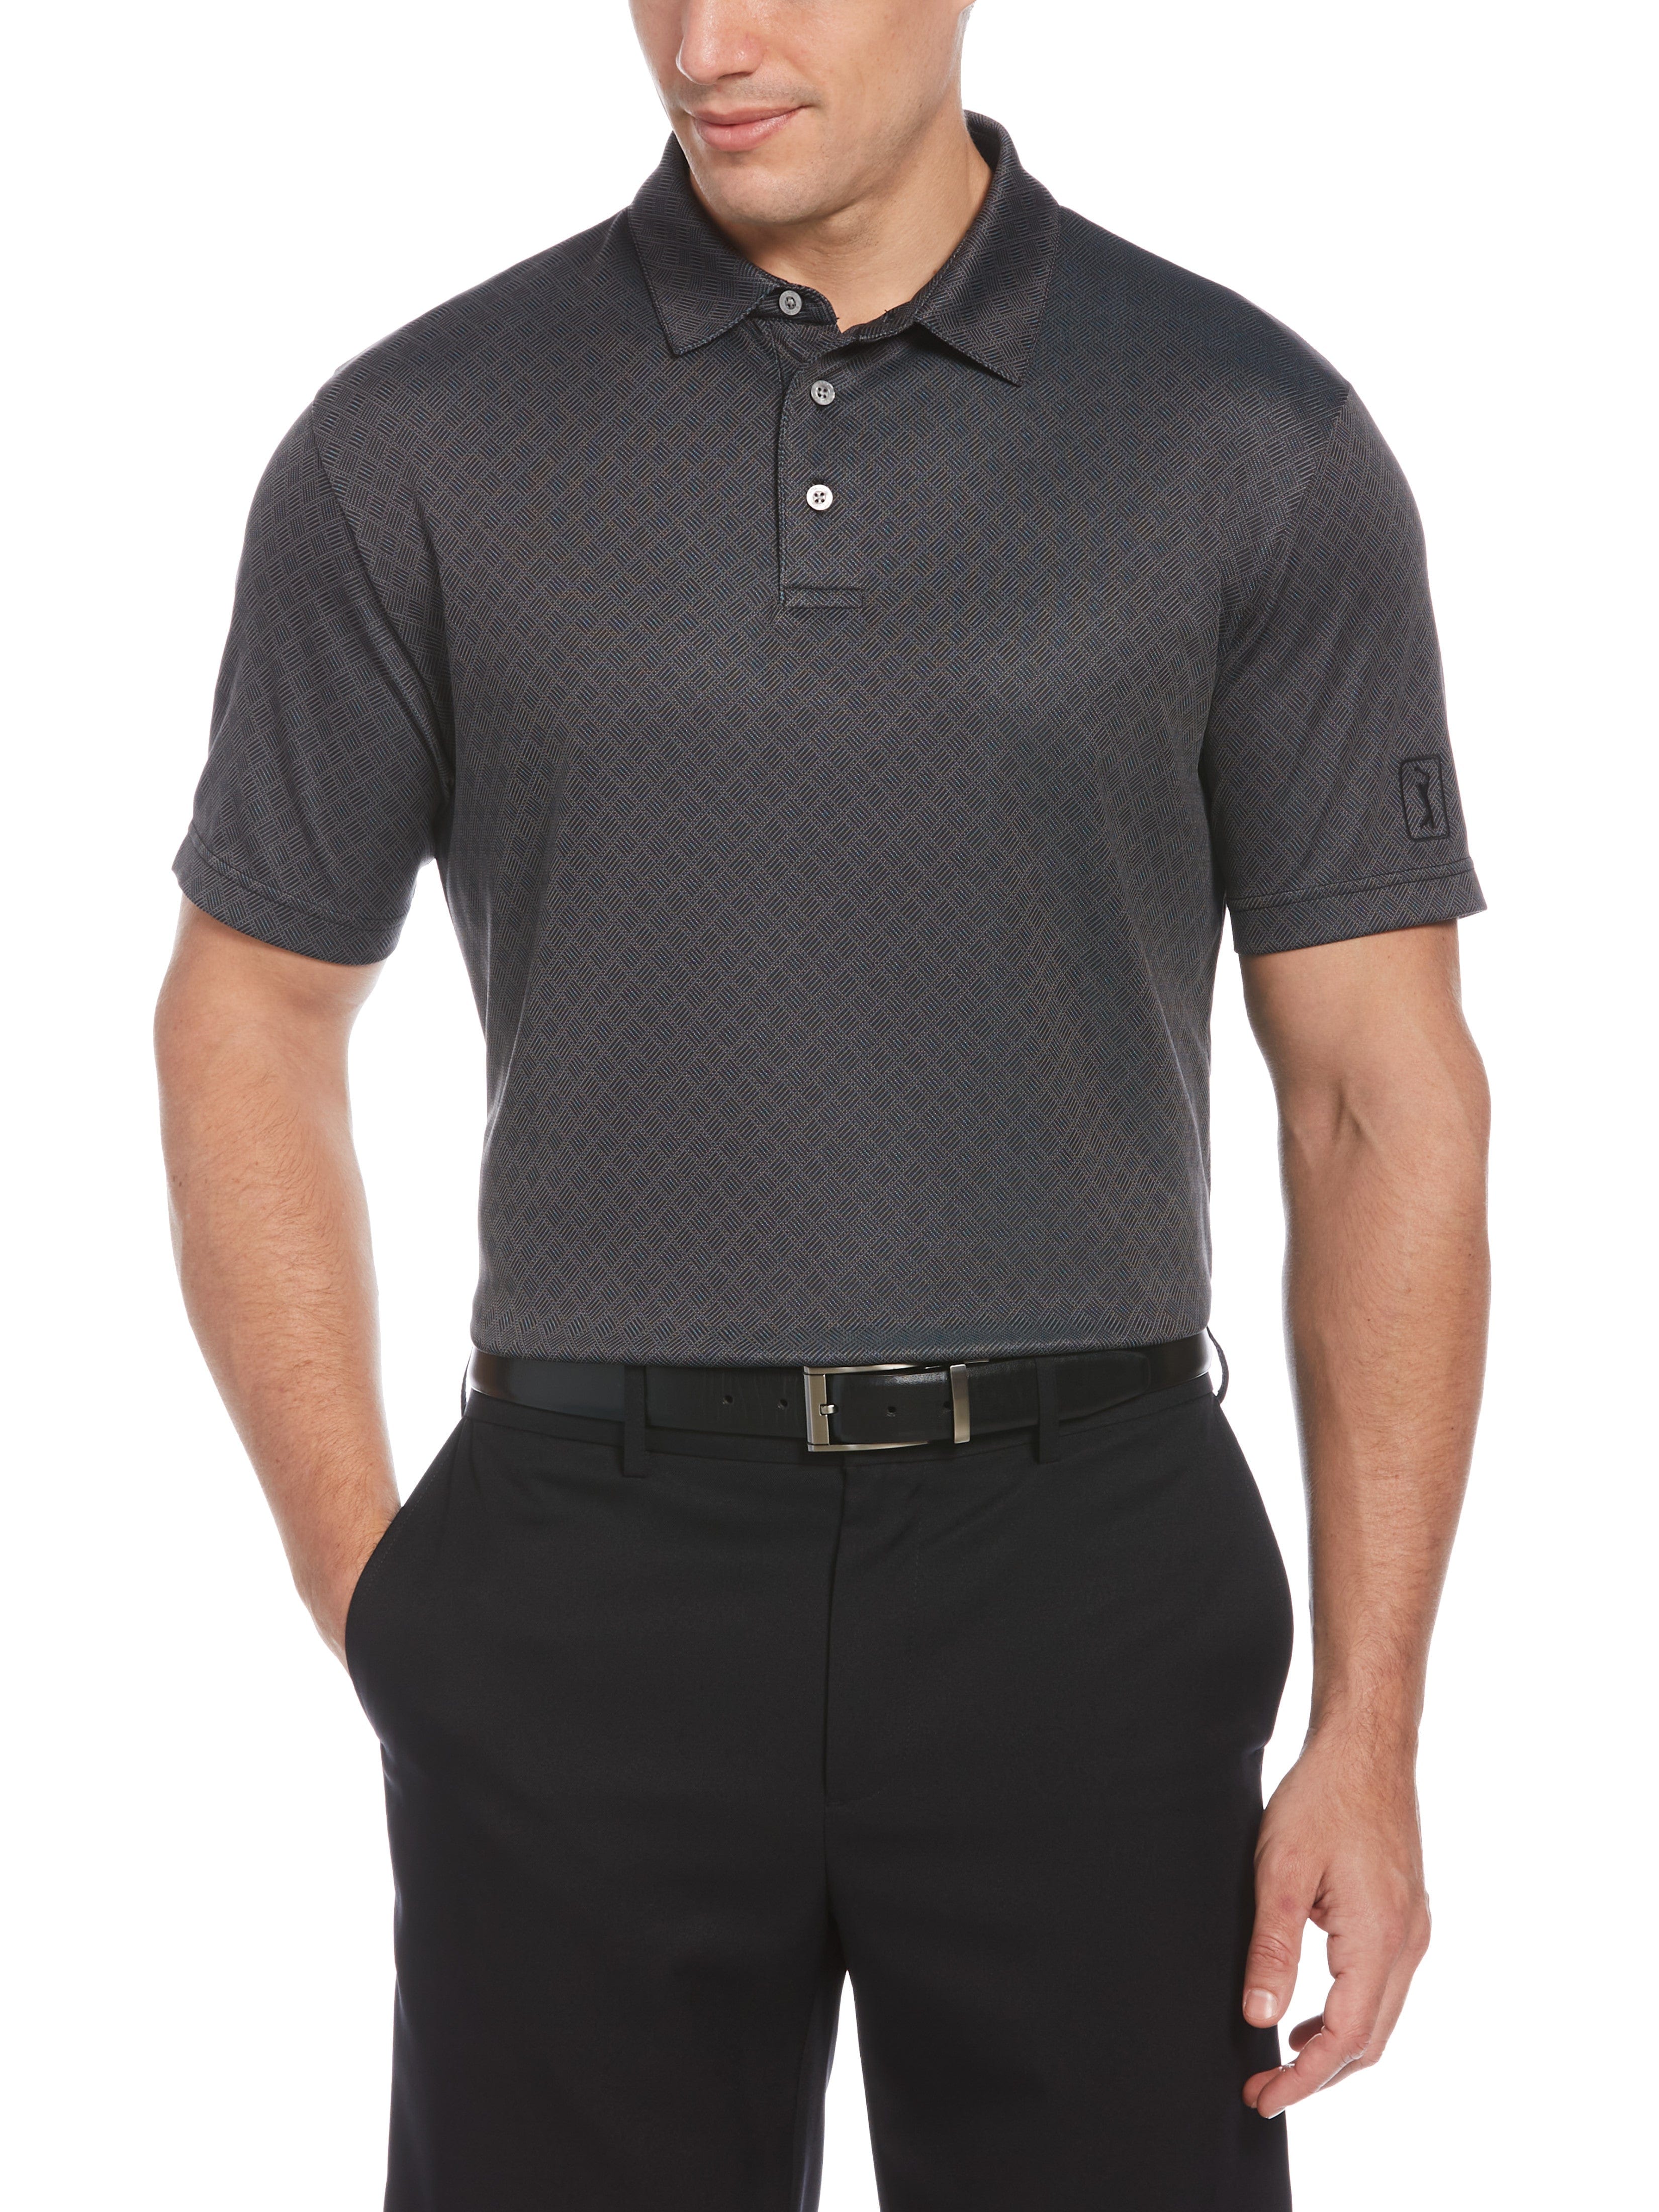 PGA TOUR Apparel Mens Diamond Jacquard Golf Polo Shirt, Size Small, Black, 100% Polyester | Golf Apparel Shop